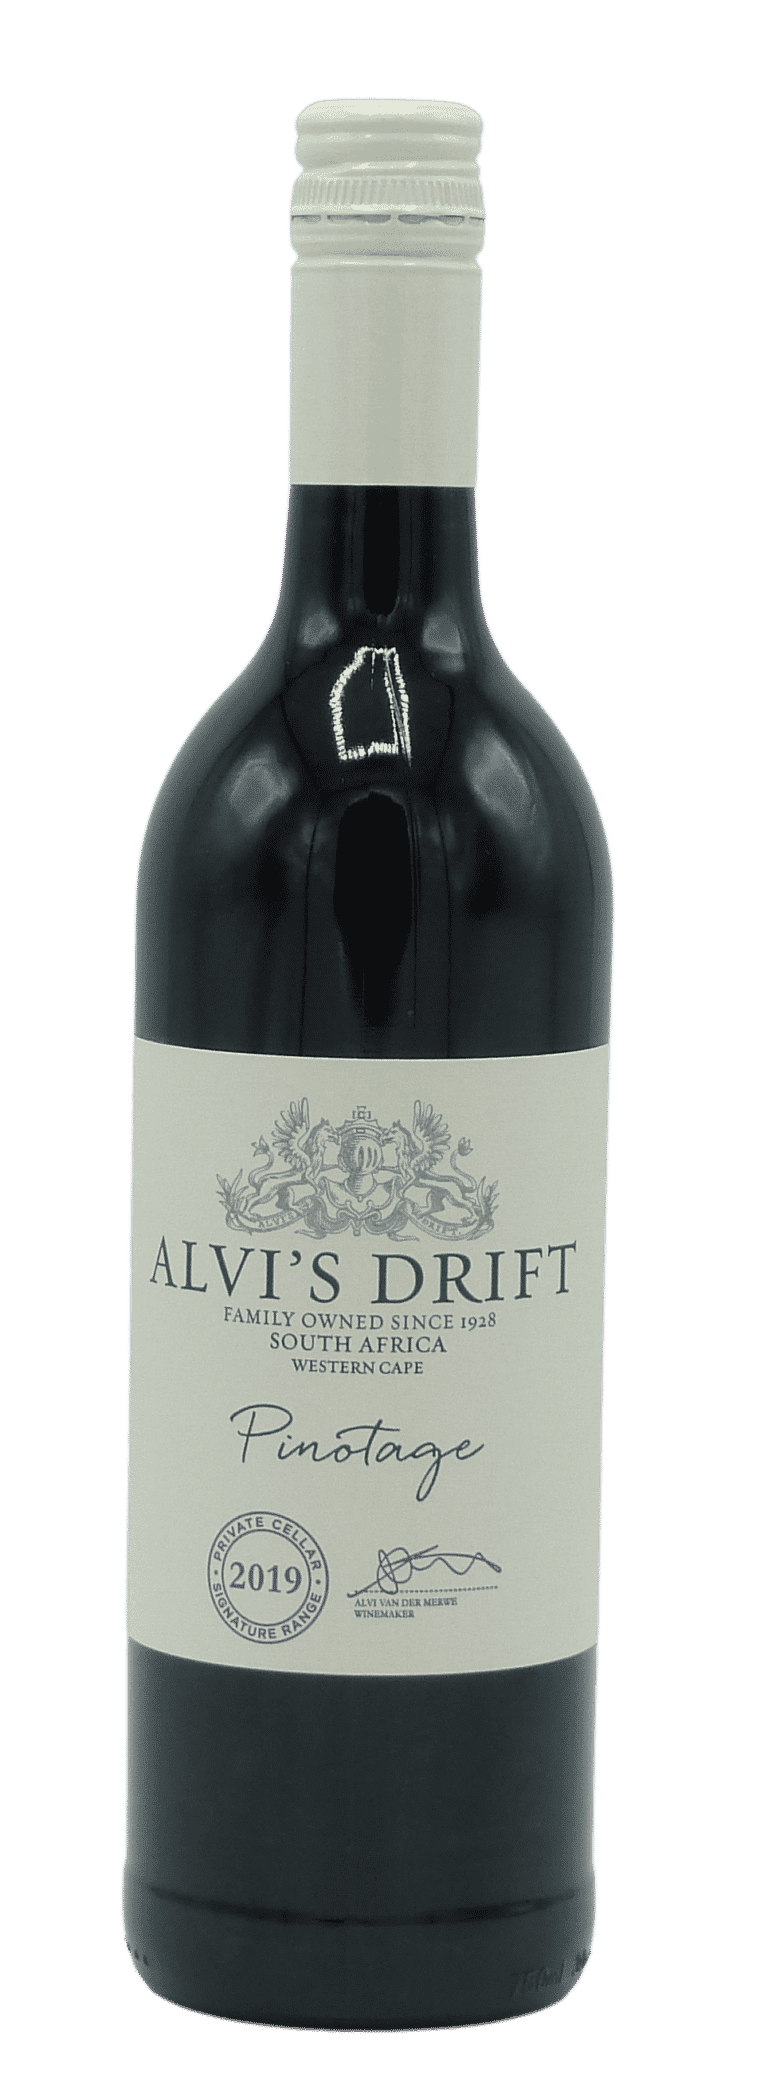 Alvis Drift Pinotage 2018 capeandgrapes